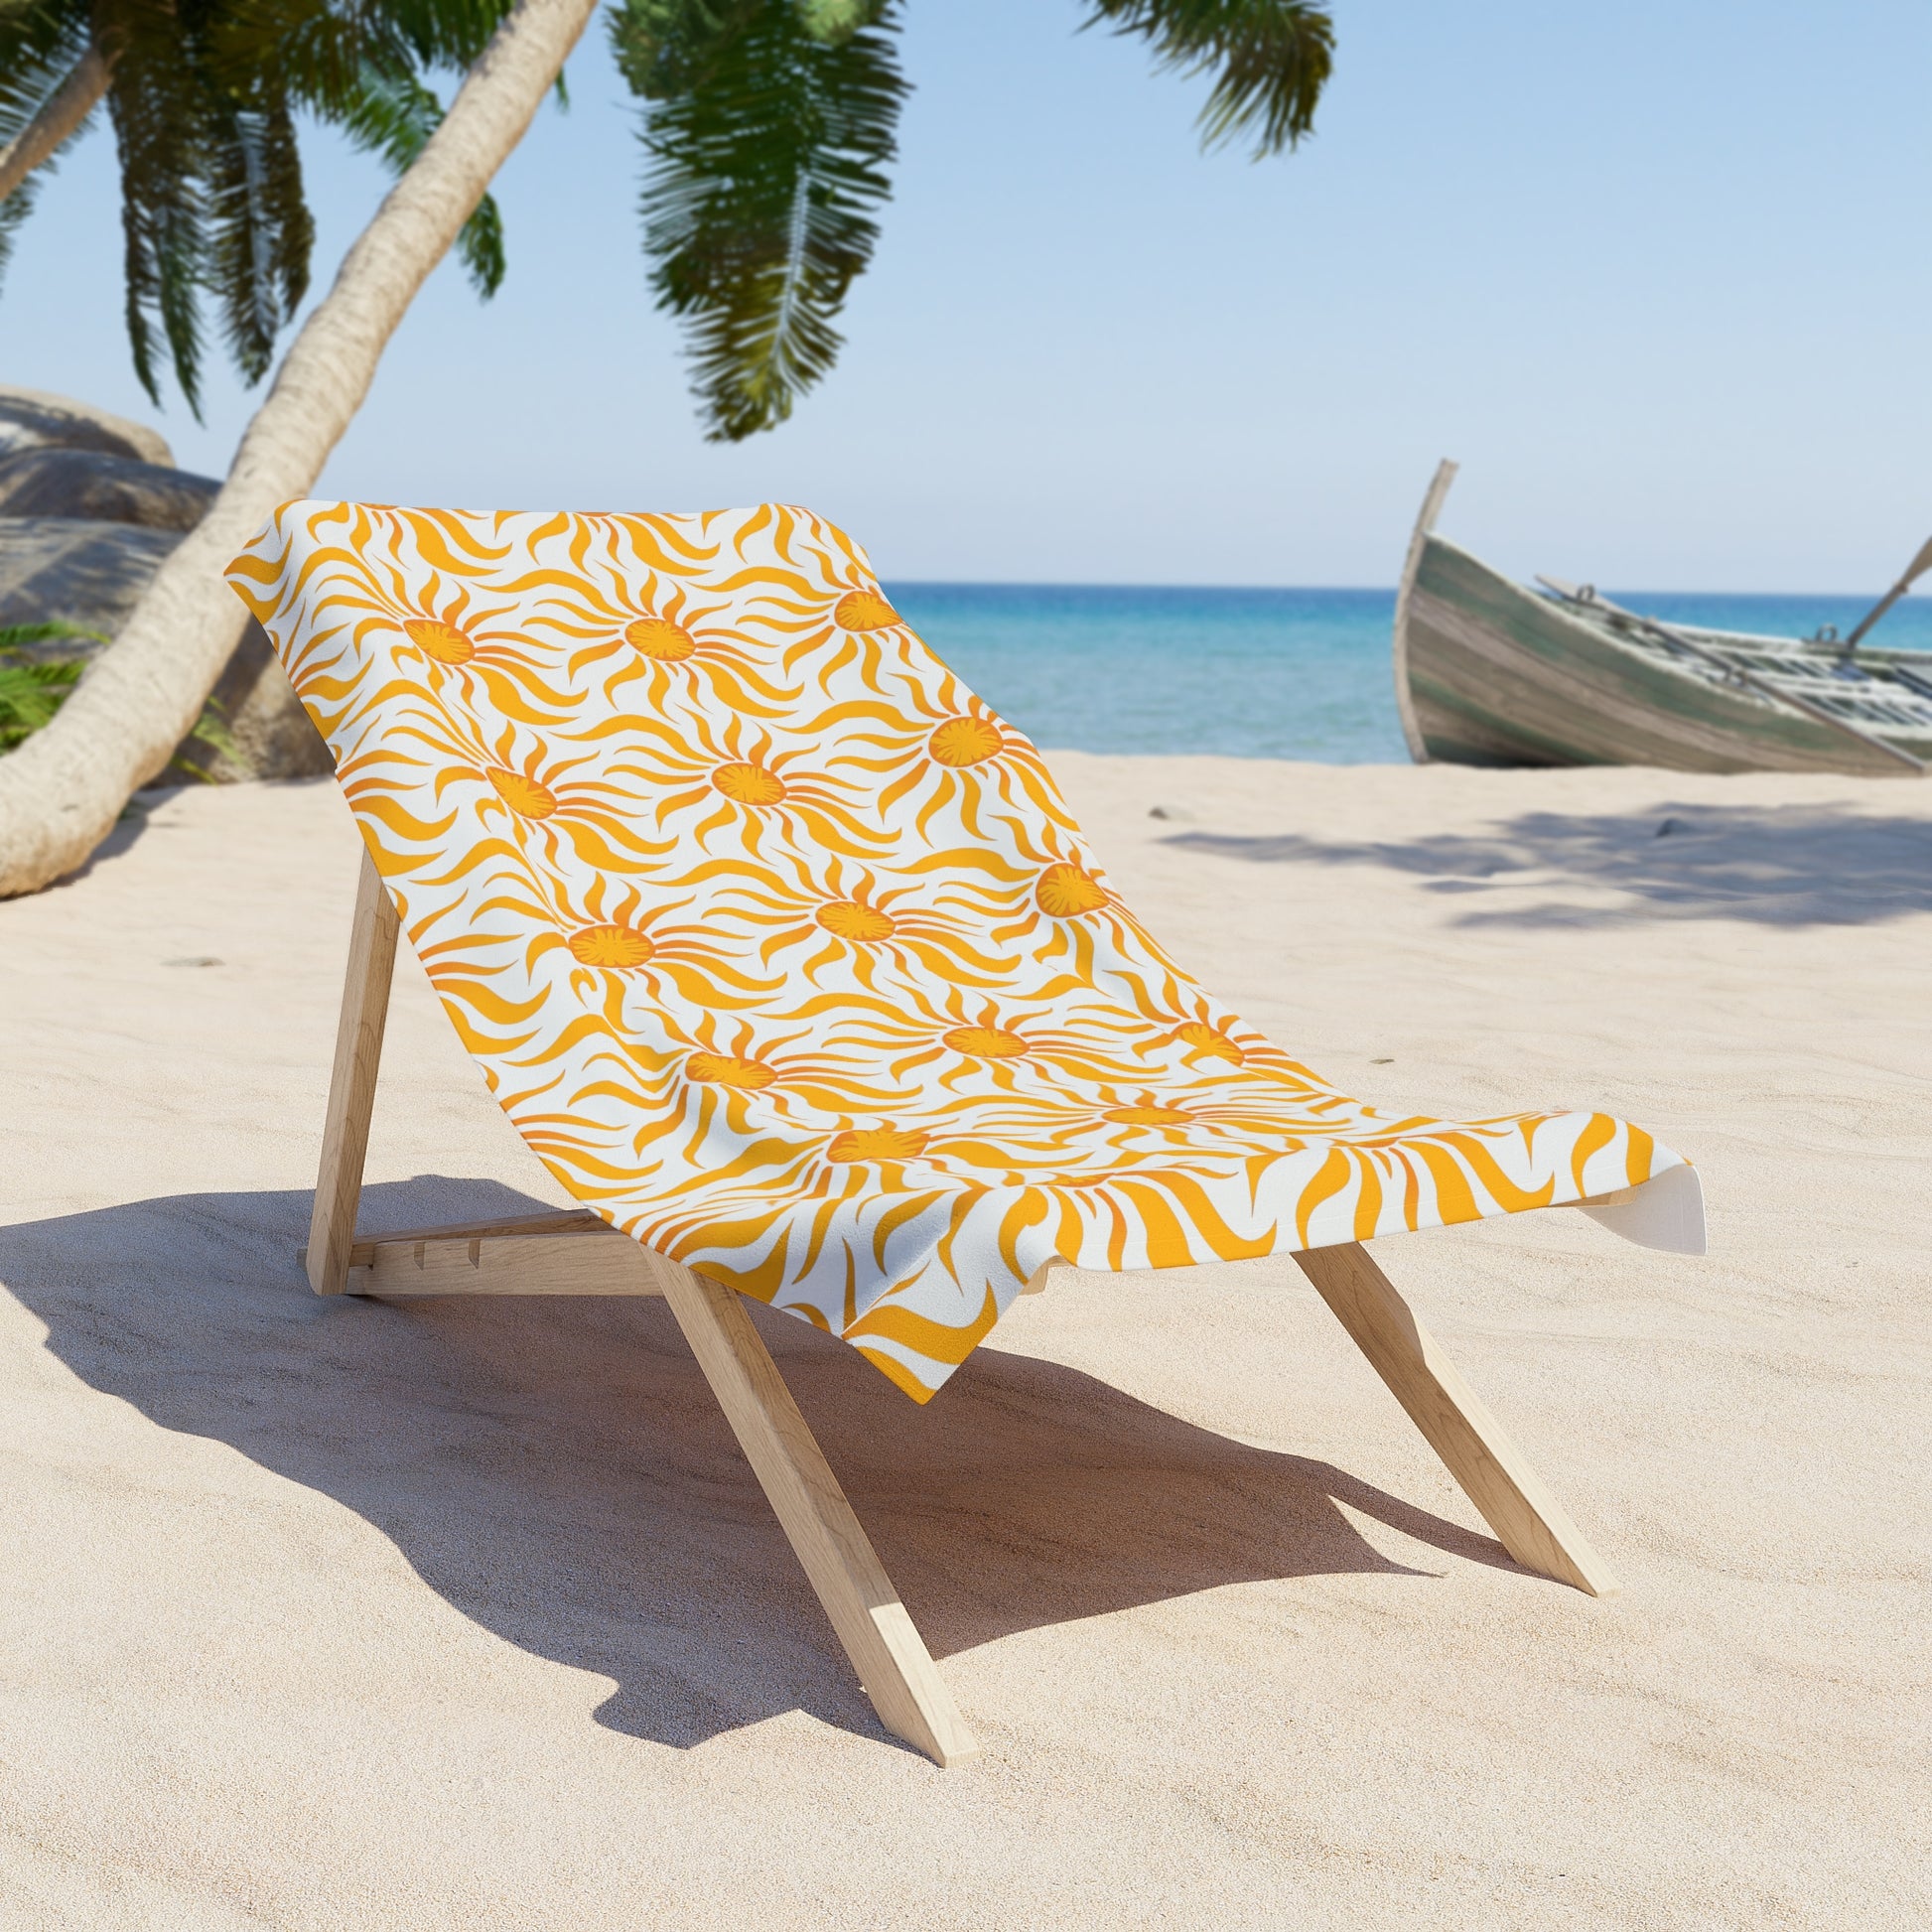 Sunny Day Beach Towel - Butiful